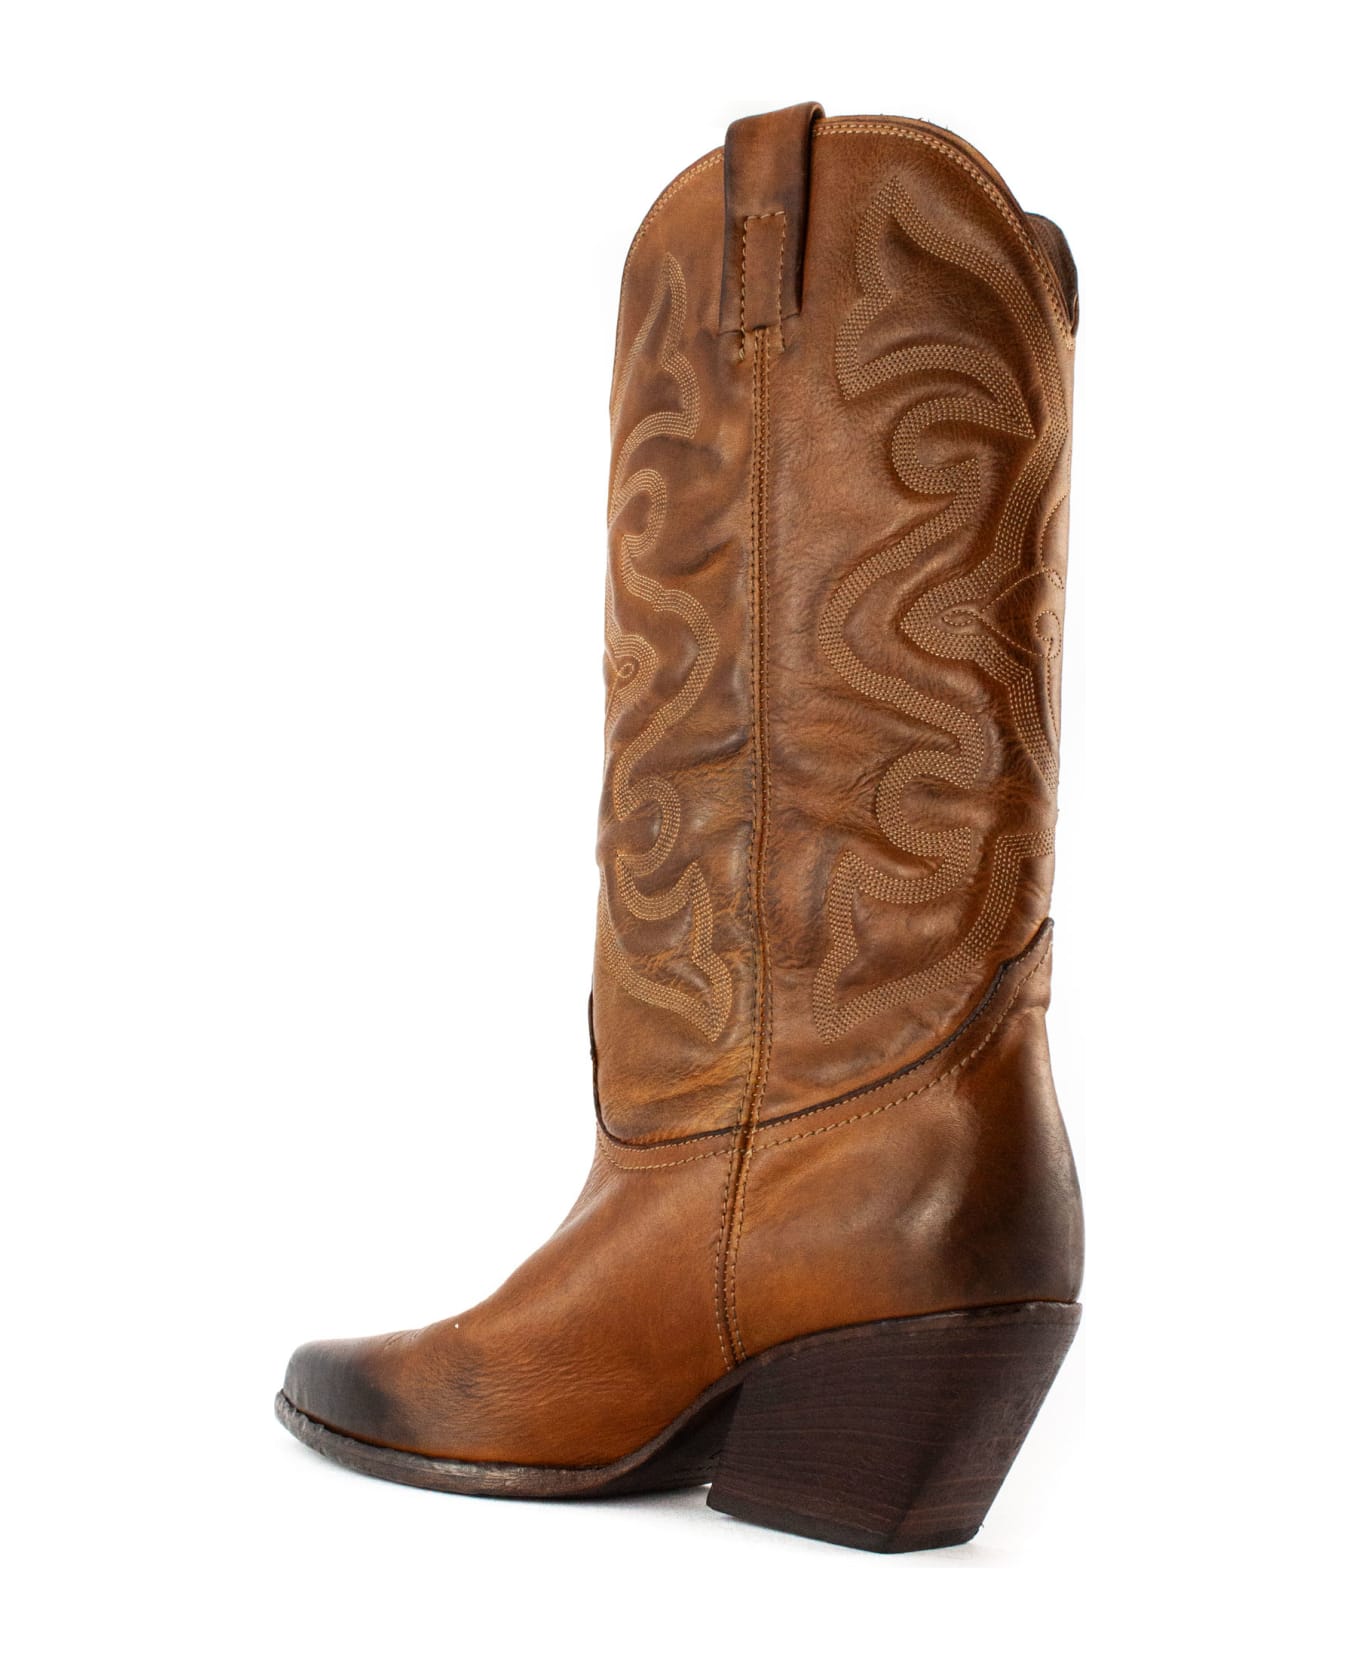 Elena Iachi Brown Leather Texan Boots - Brown